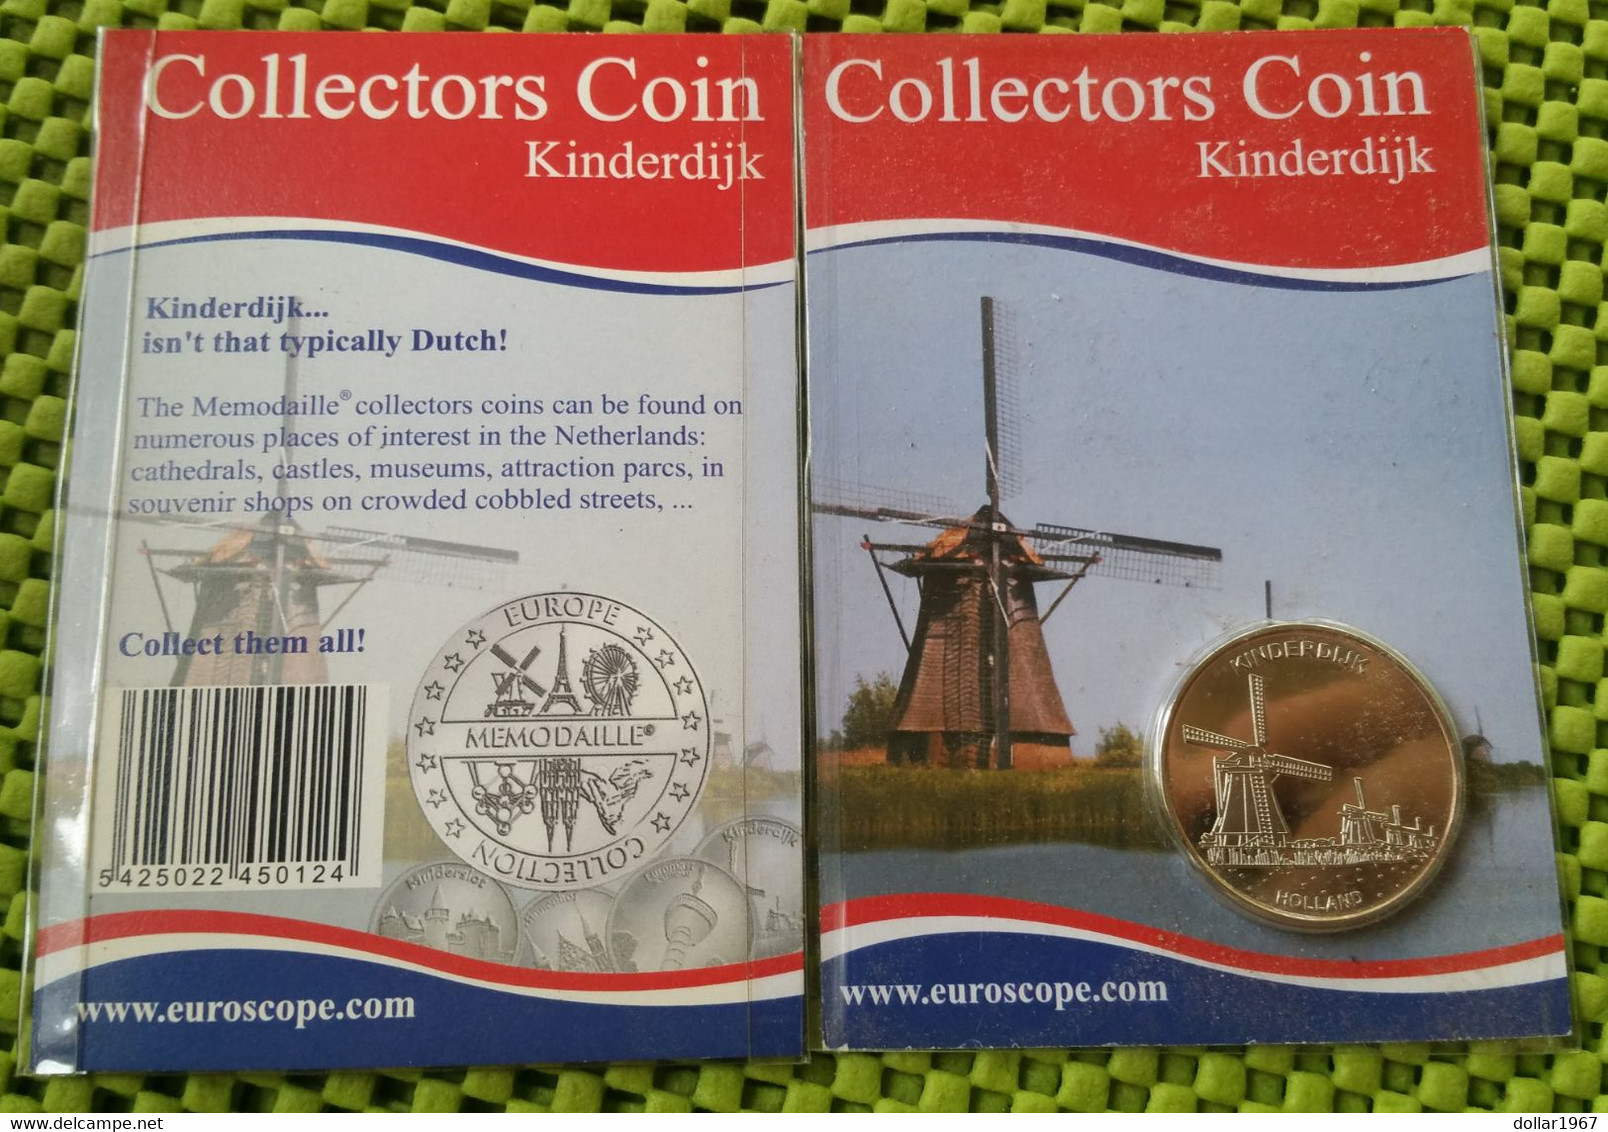 Collectors Coin  - Kinderdijk Alblasserwaard - Molenlanden / Millland / - Pays-Bas - Pays-Bas - Elongated Coins